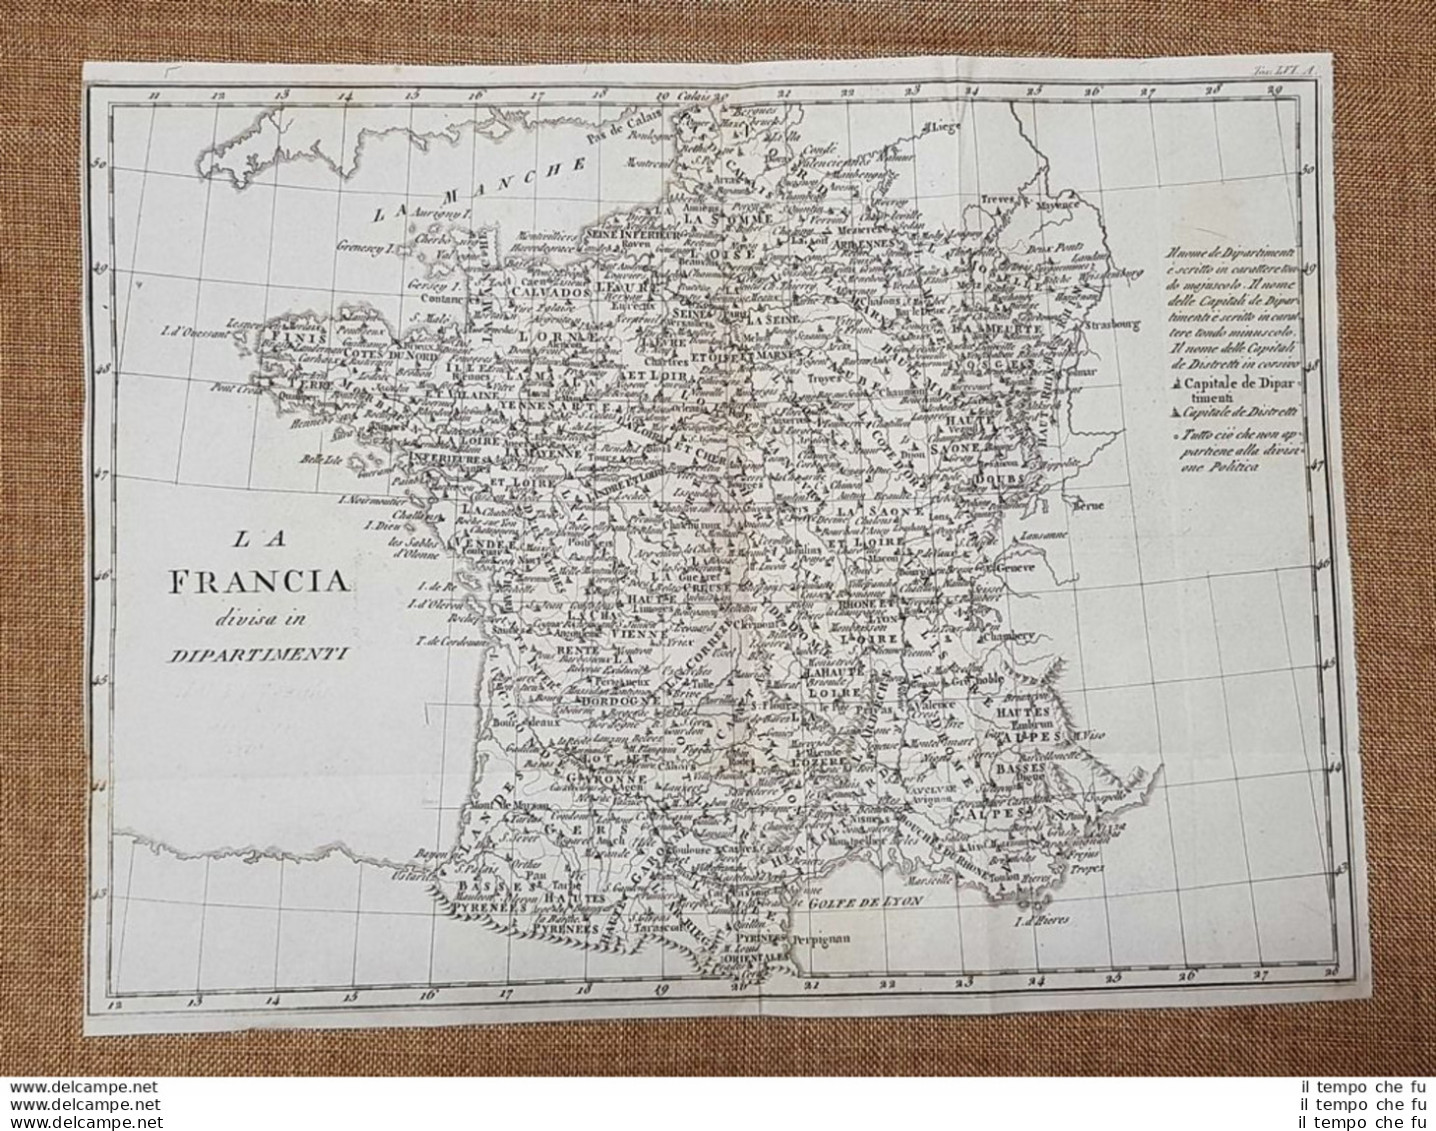 Carta Geografica O Mappa Francia Divisa In Dipartimenti Leonardo Cacciatore 1831 - Mapas Geográficas